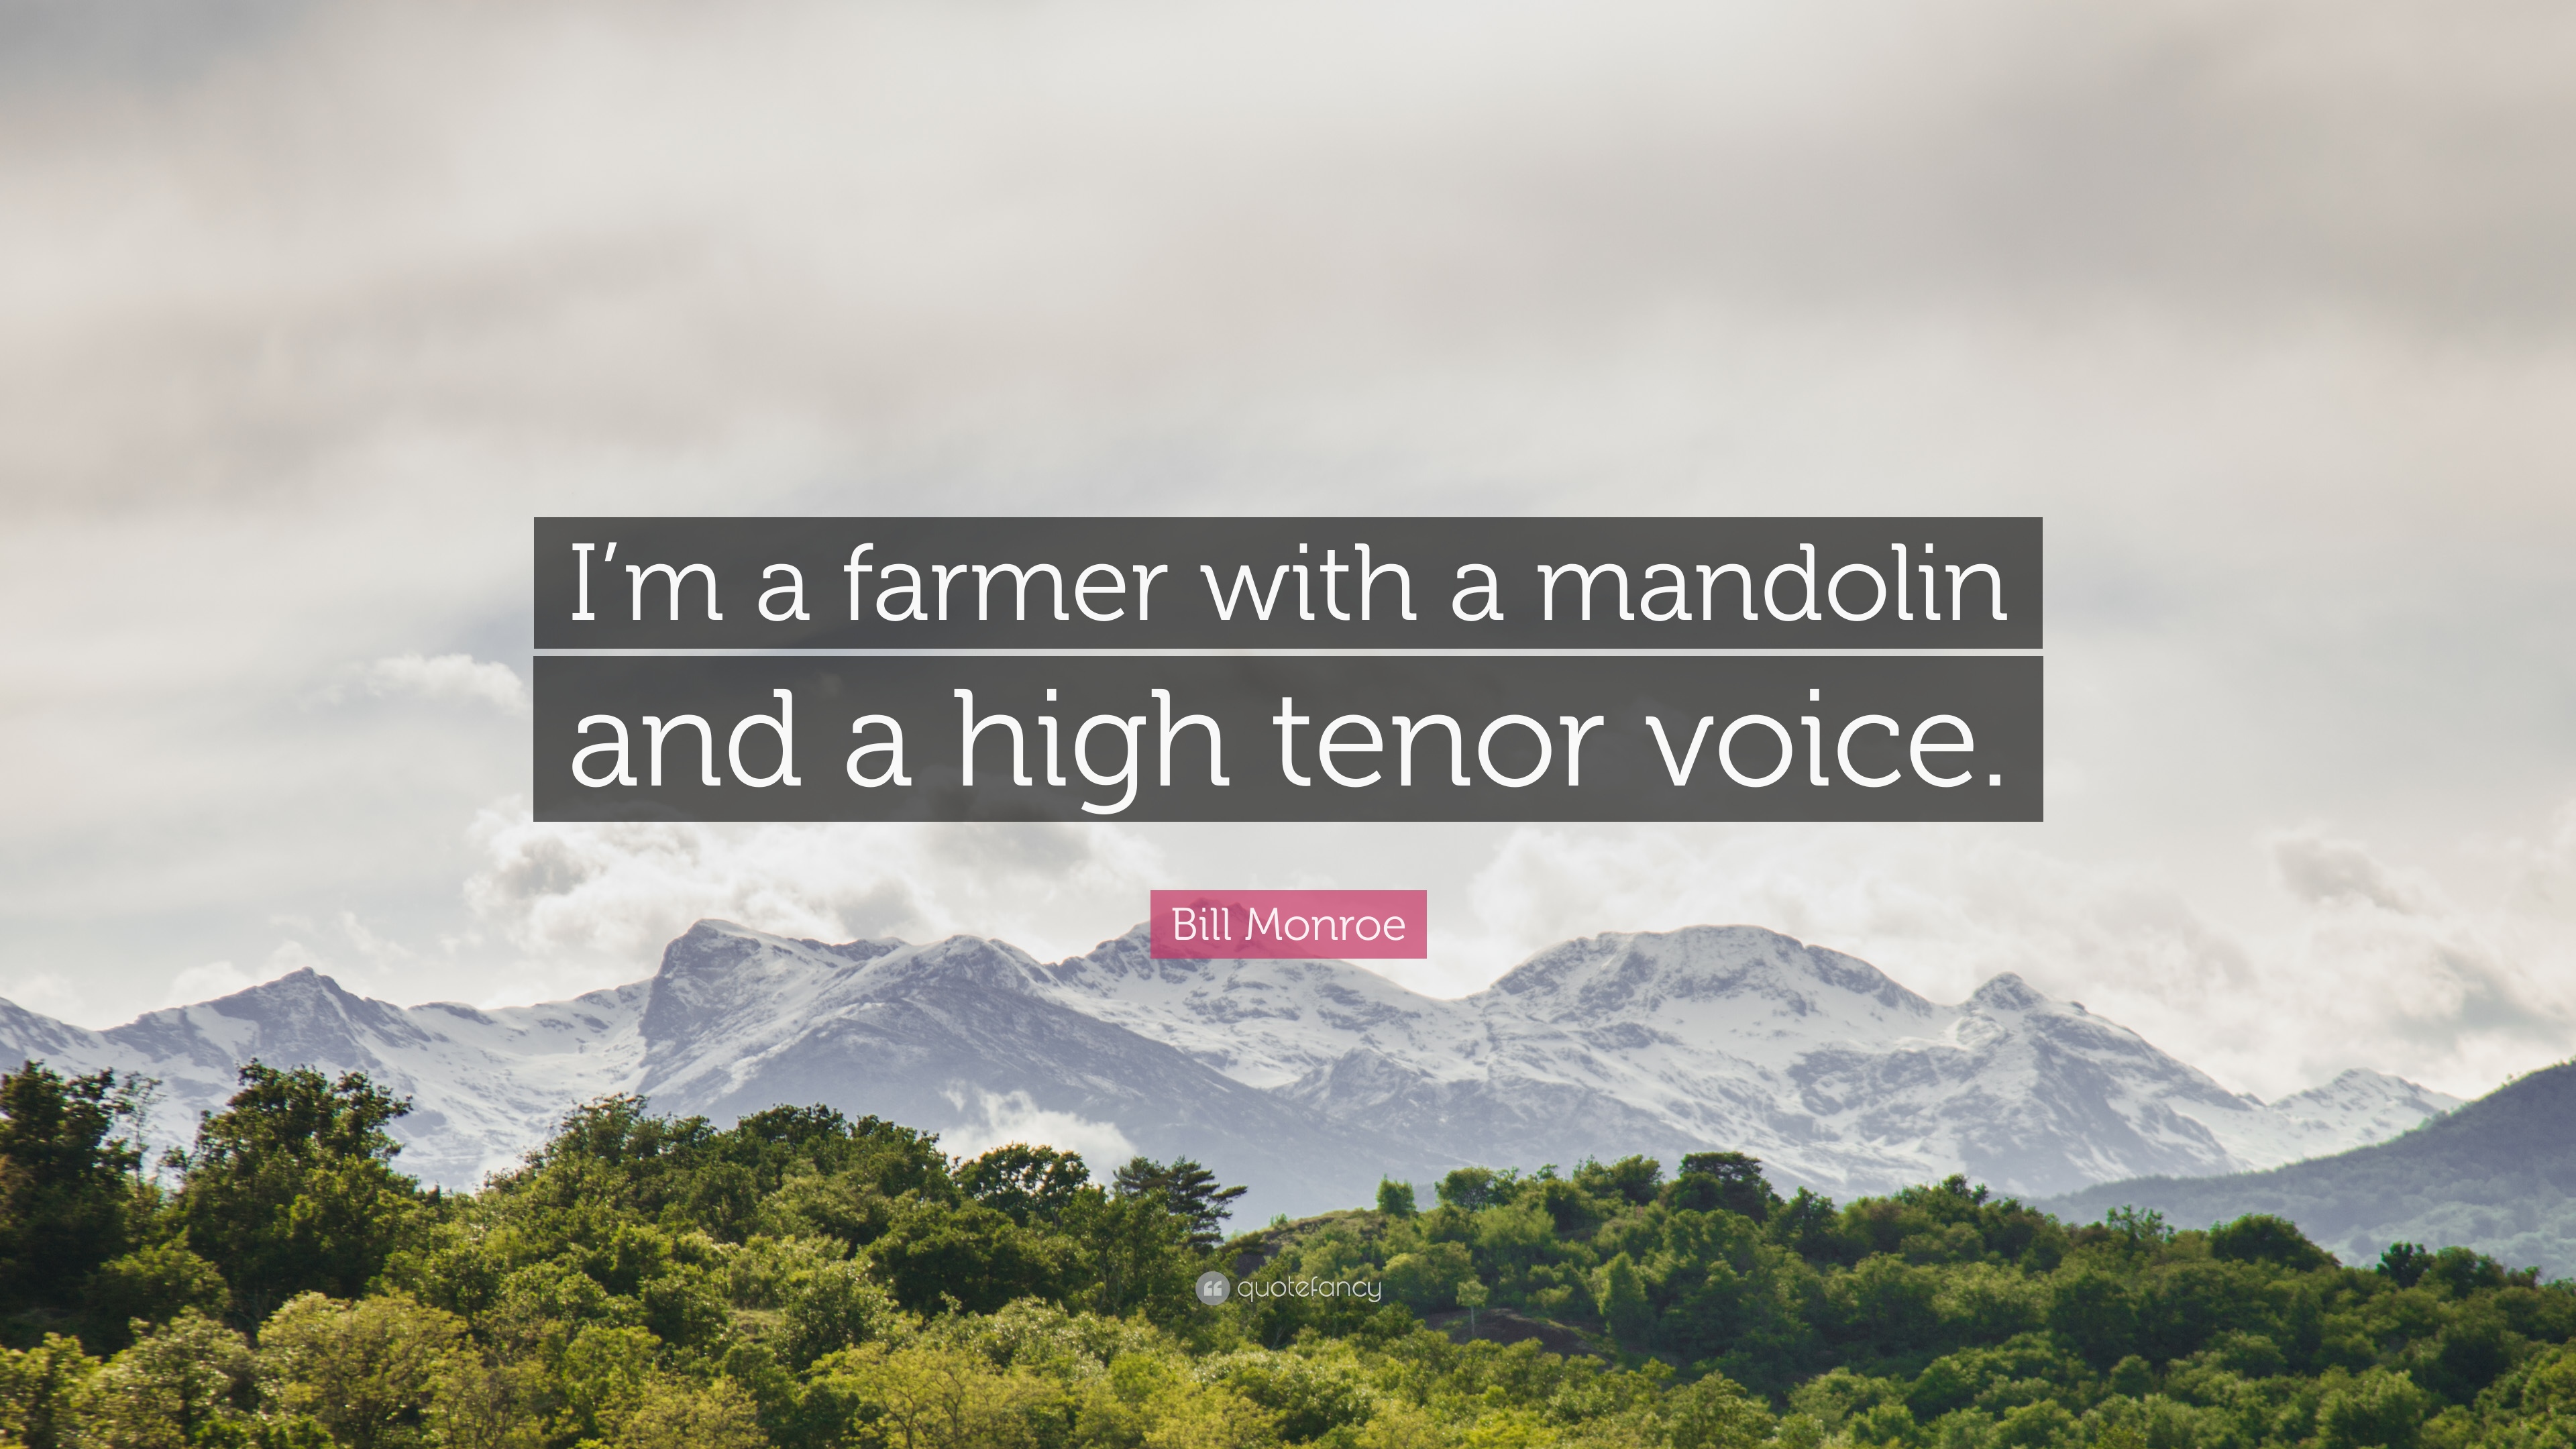 Bill Monroe Quote: “I'm a farmer with a mandolin and a high tenor